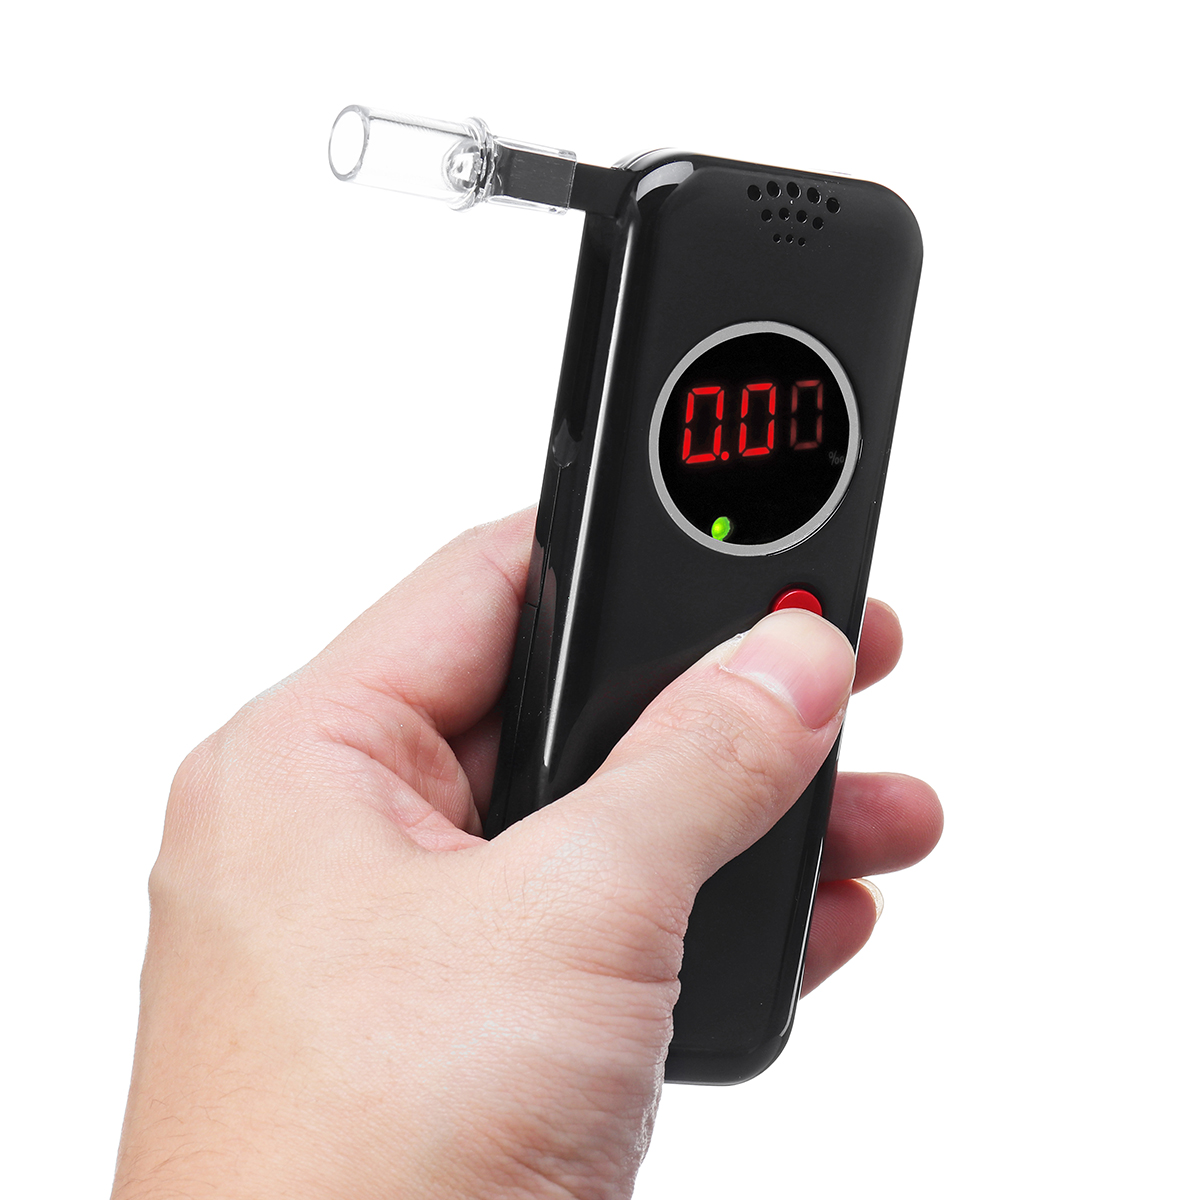 

6 Mouthpieces LCD Digital Breath Alcohol Tester Breathalyzer Analyzer Detector